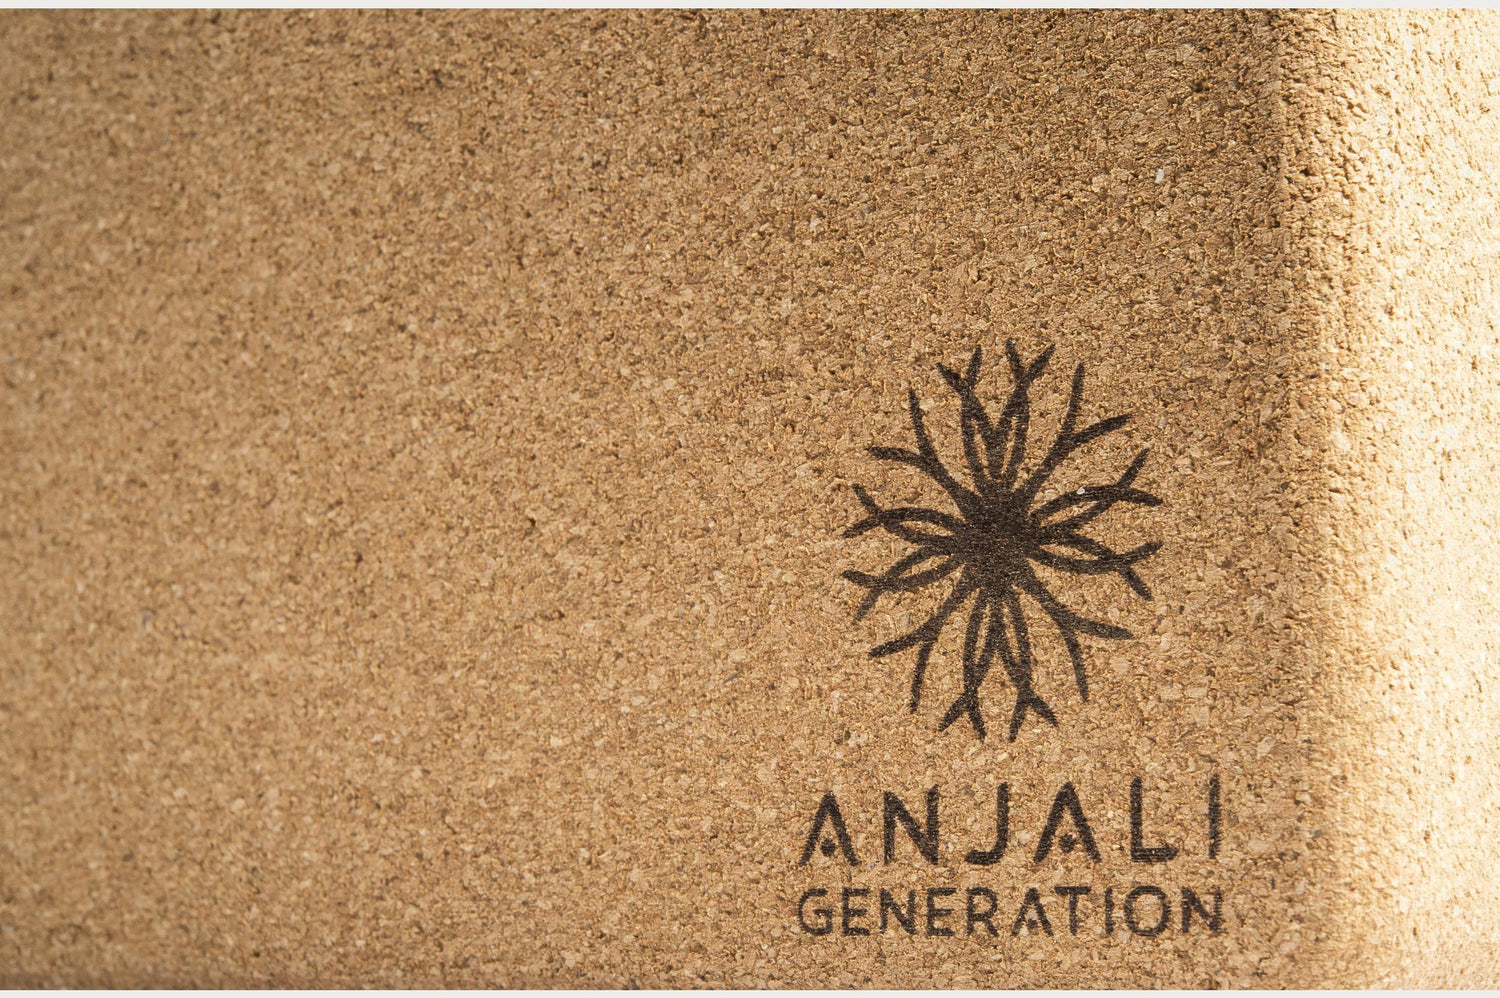 Anjali Cork Yoga Block-Yoga Accessories-Anjali Generation